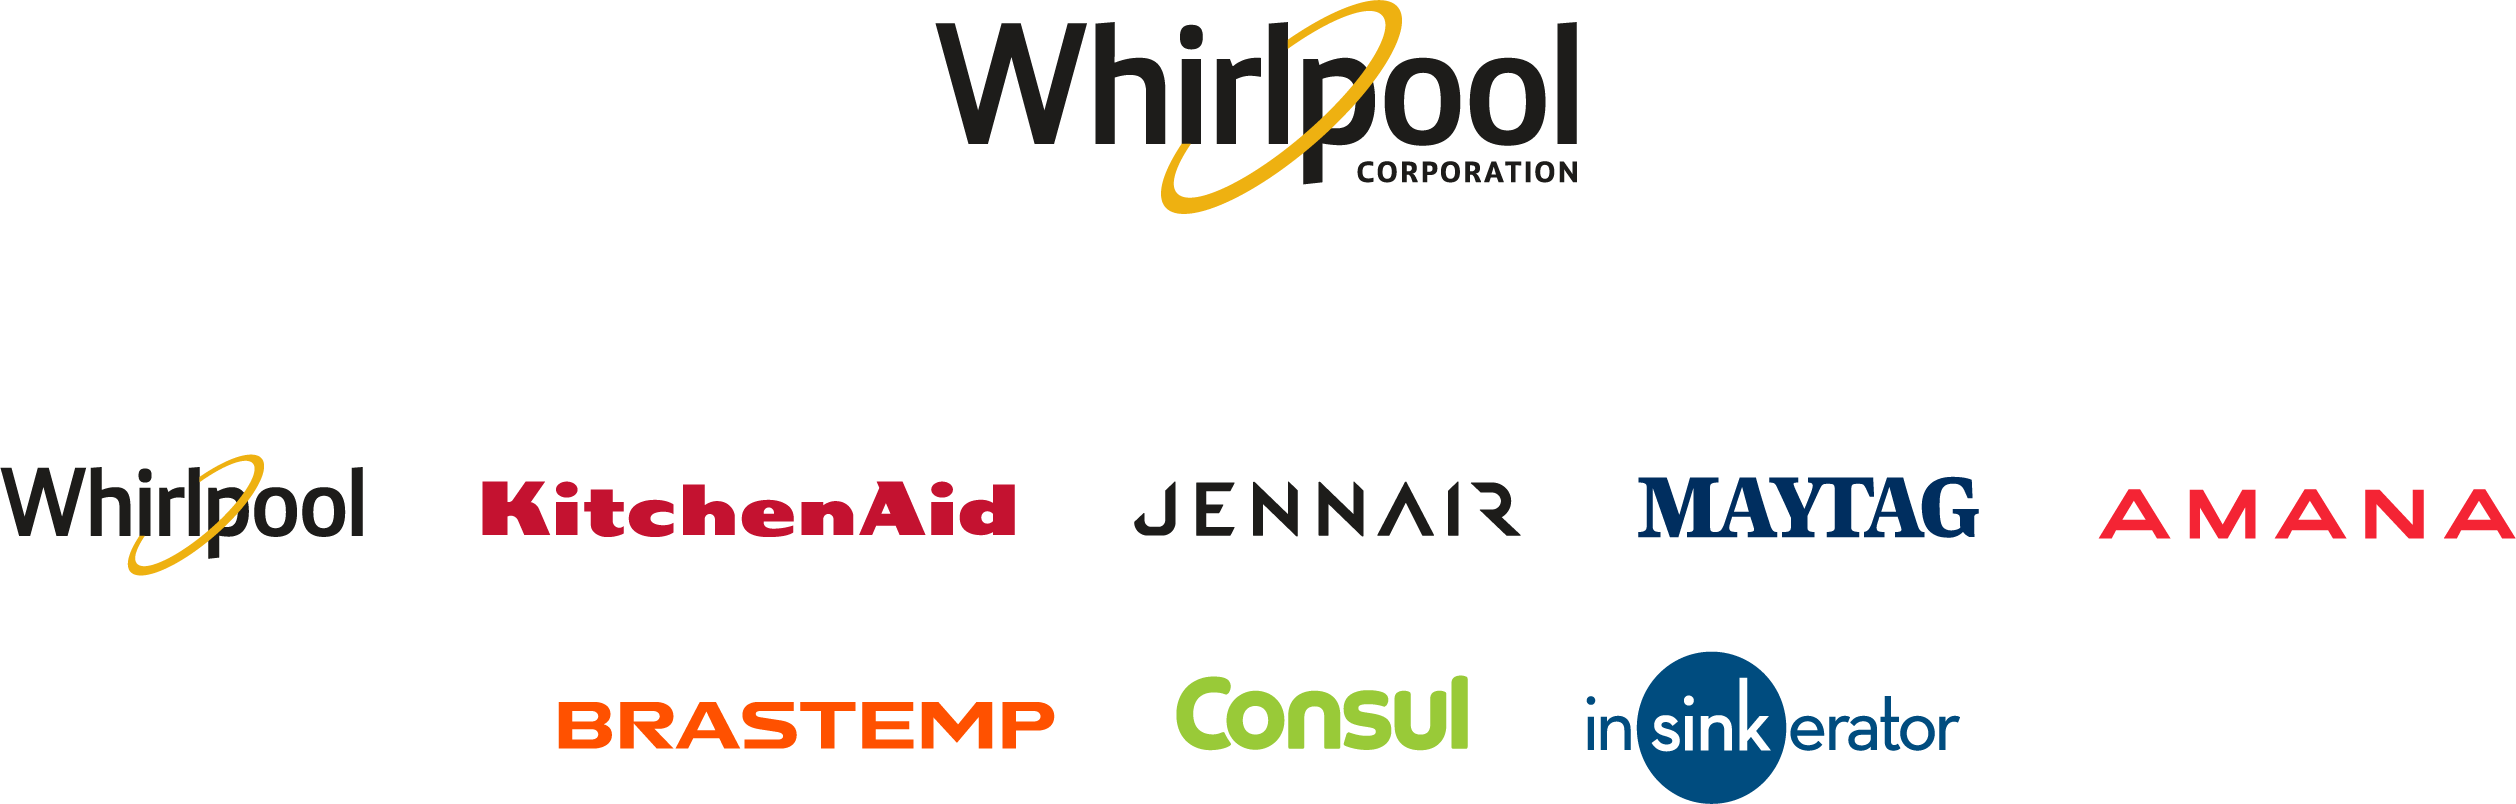 Whirlpool Corporation and branded logo lockup